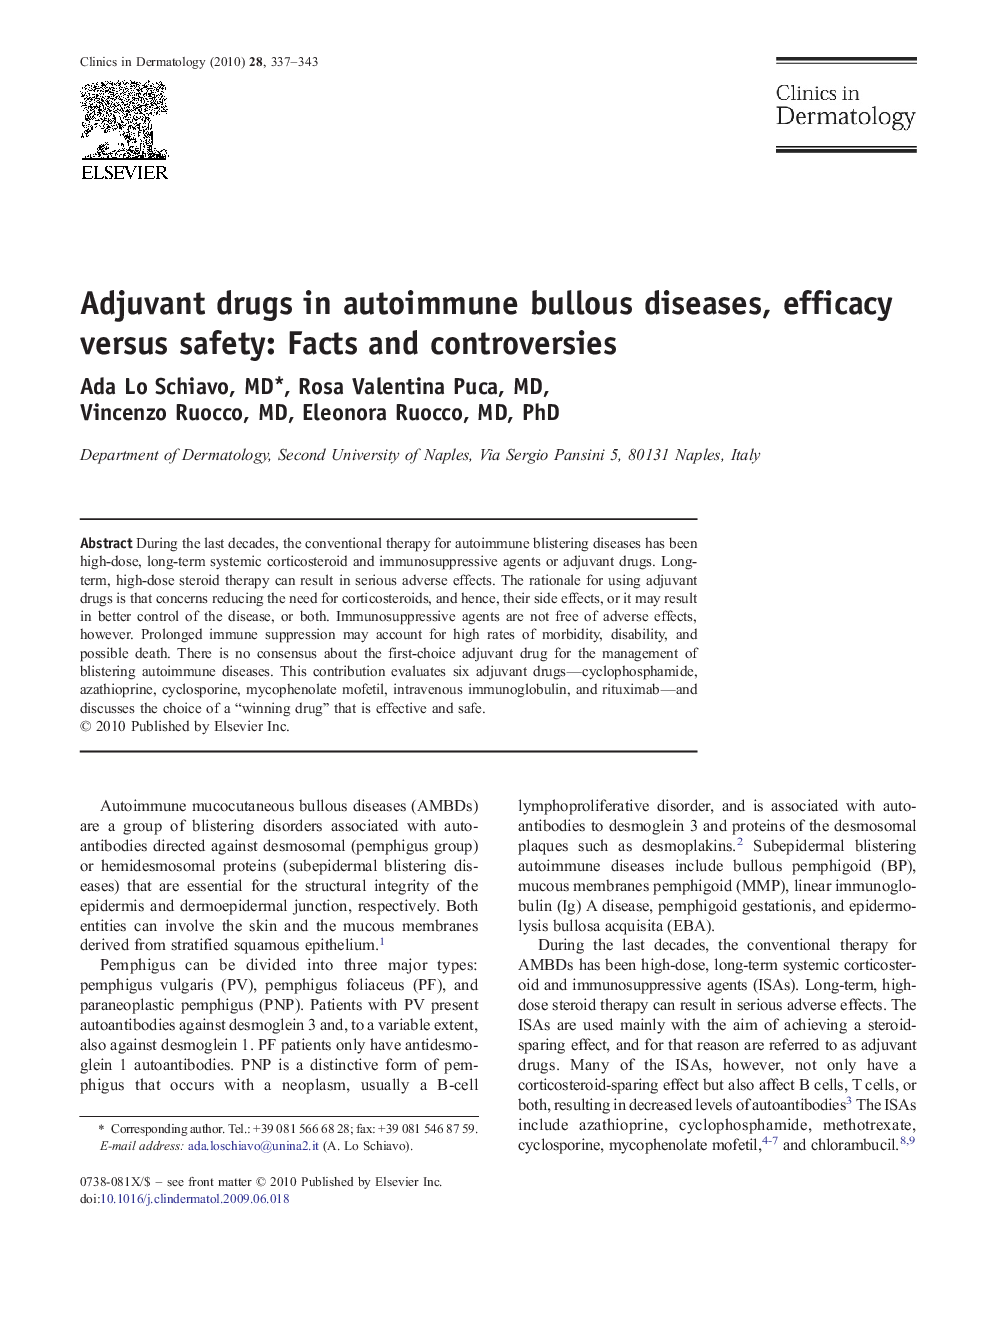 Adjuvant drugs in autoimmune bullous diseases, efficacy versus safety: Facts and controversies